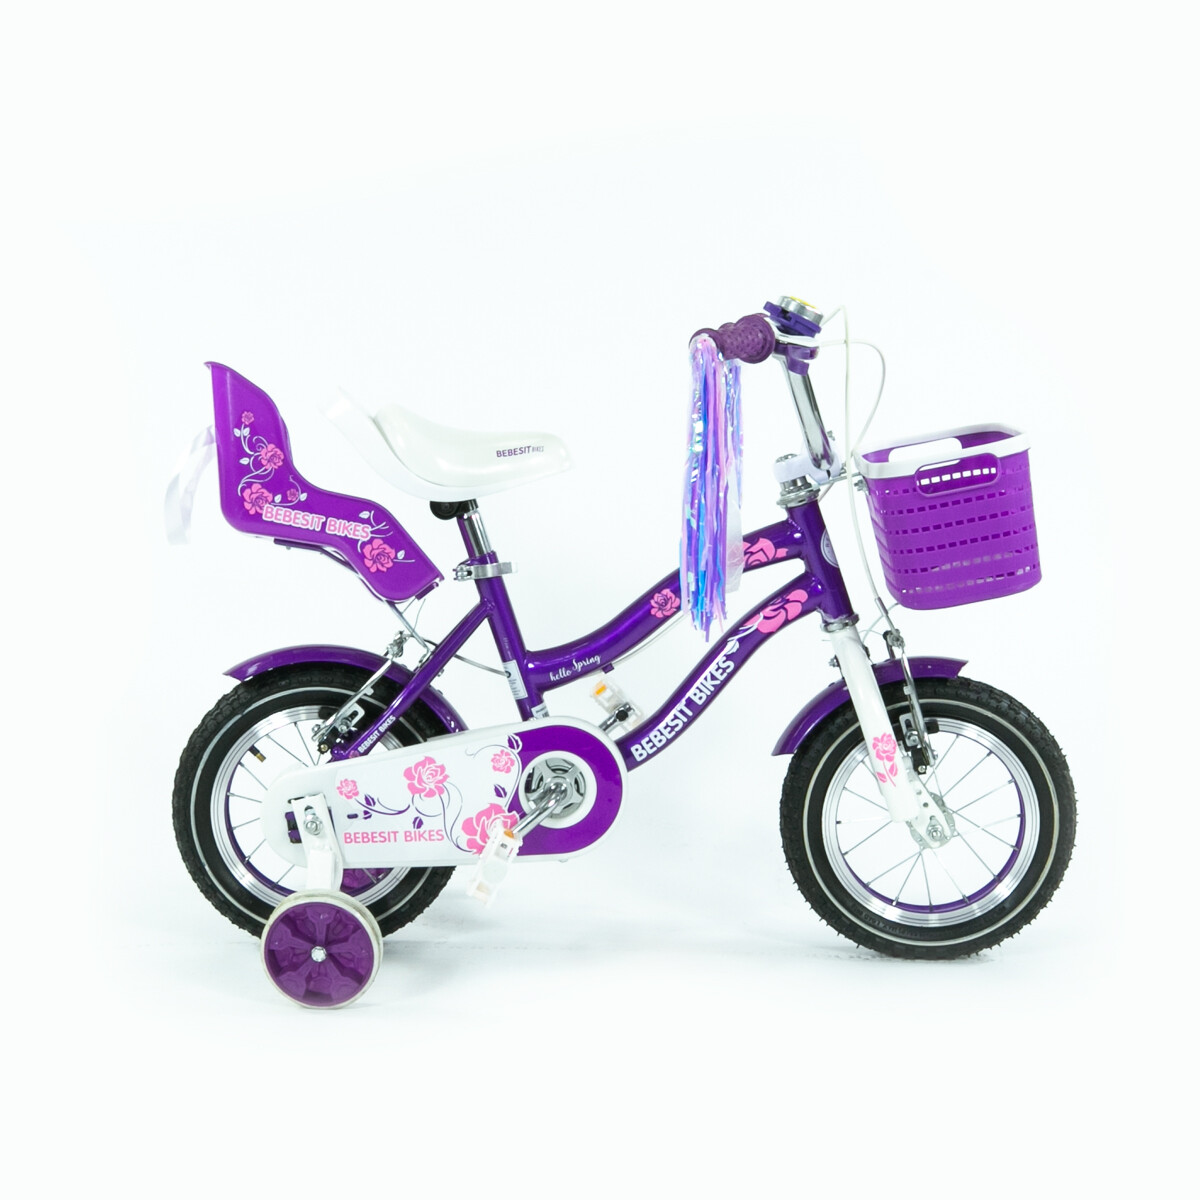 Bebesit Bicicleta Queen rodado 12 -violeta 